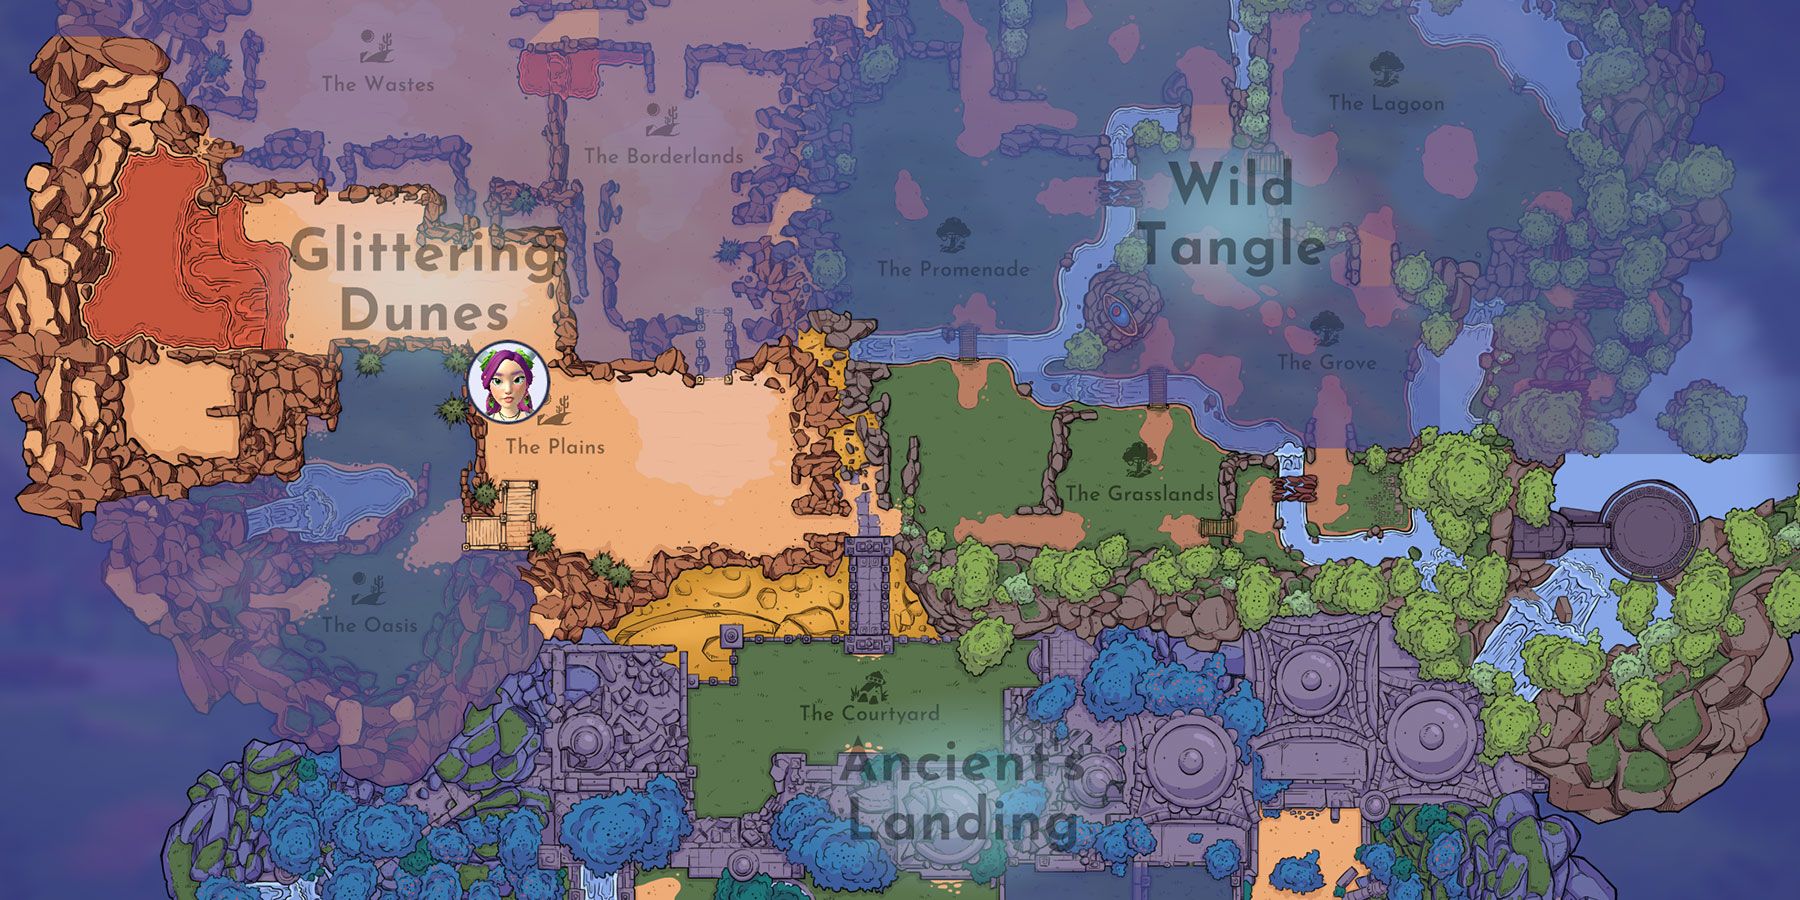 Disney Dreamlight Valley Eternity Isle in-game map not all unlocked.